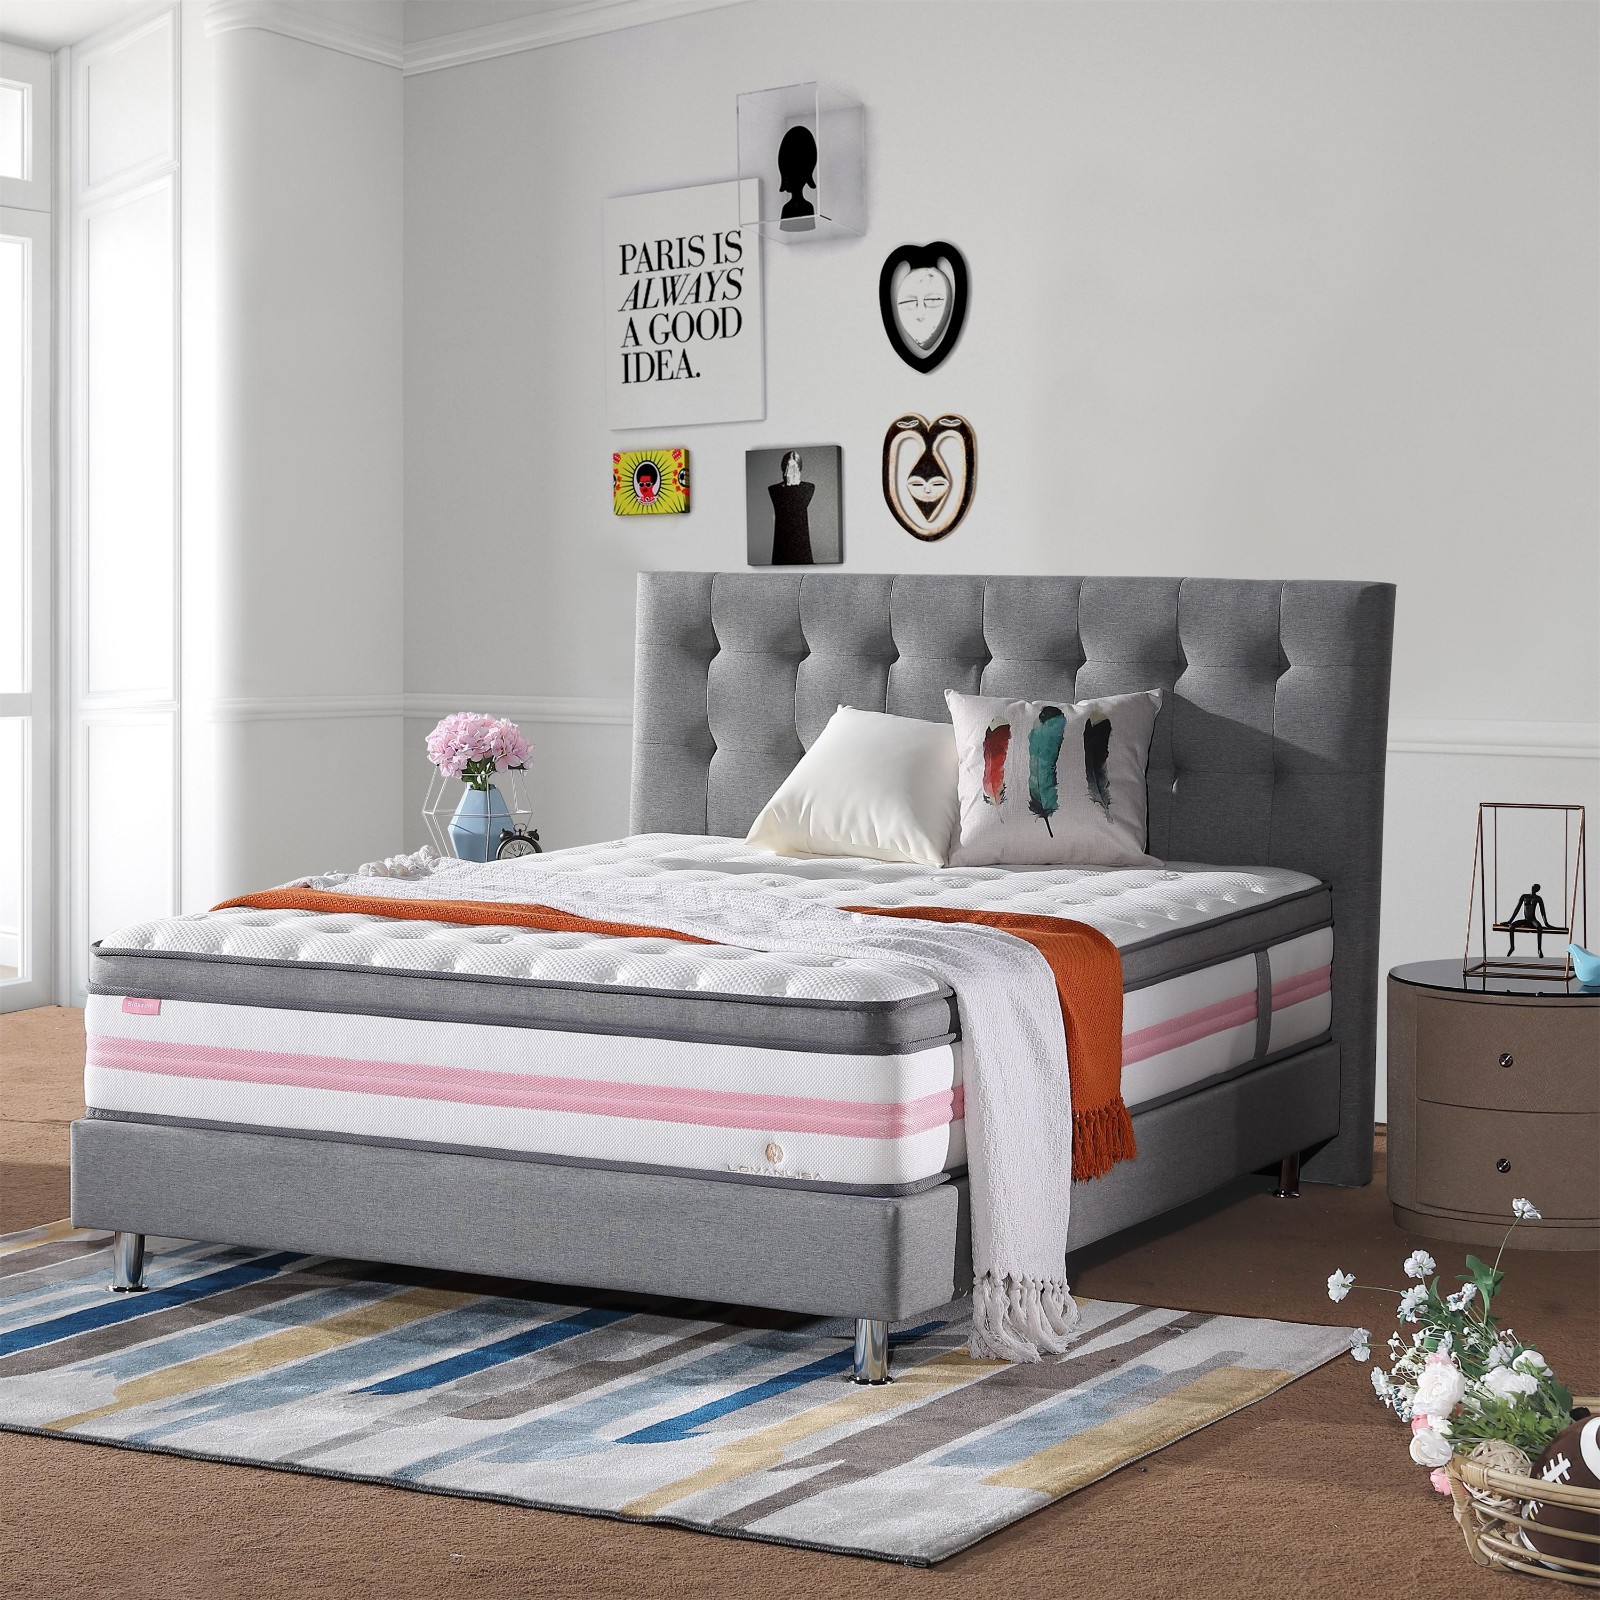 JLH popular dynasty mattress Comfortable Series delivered easily-11